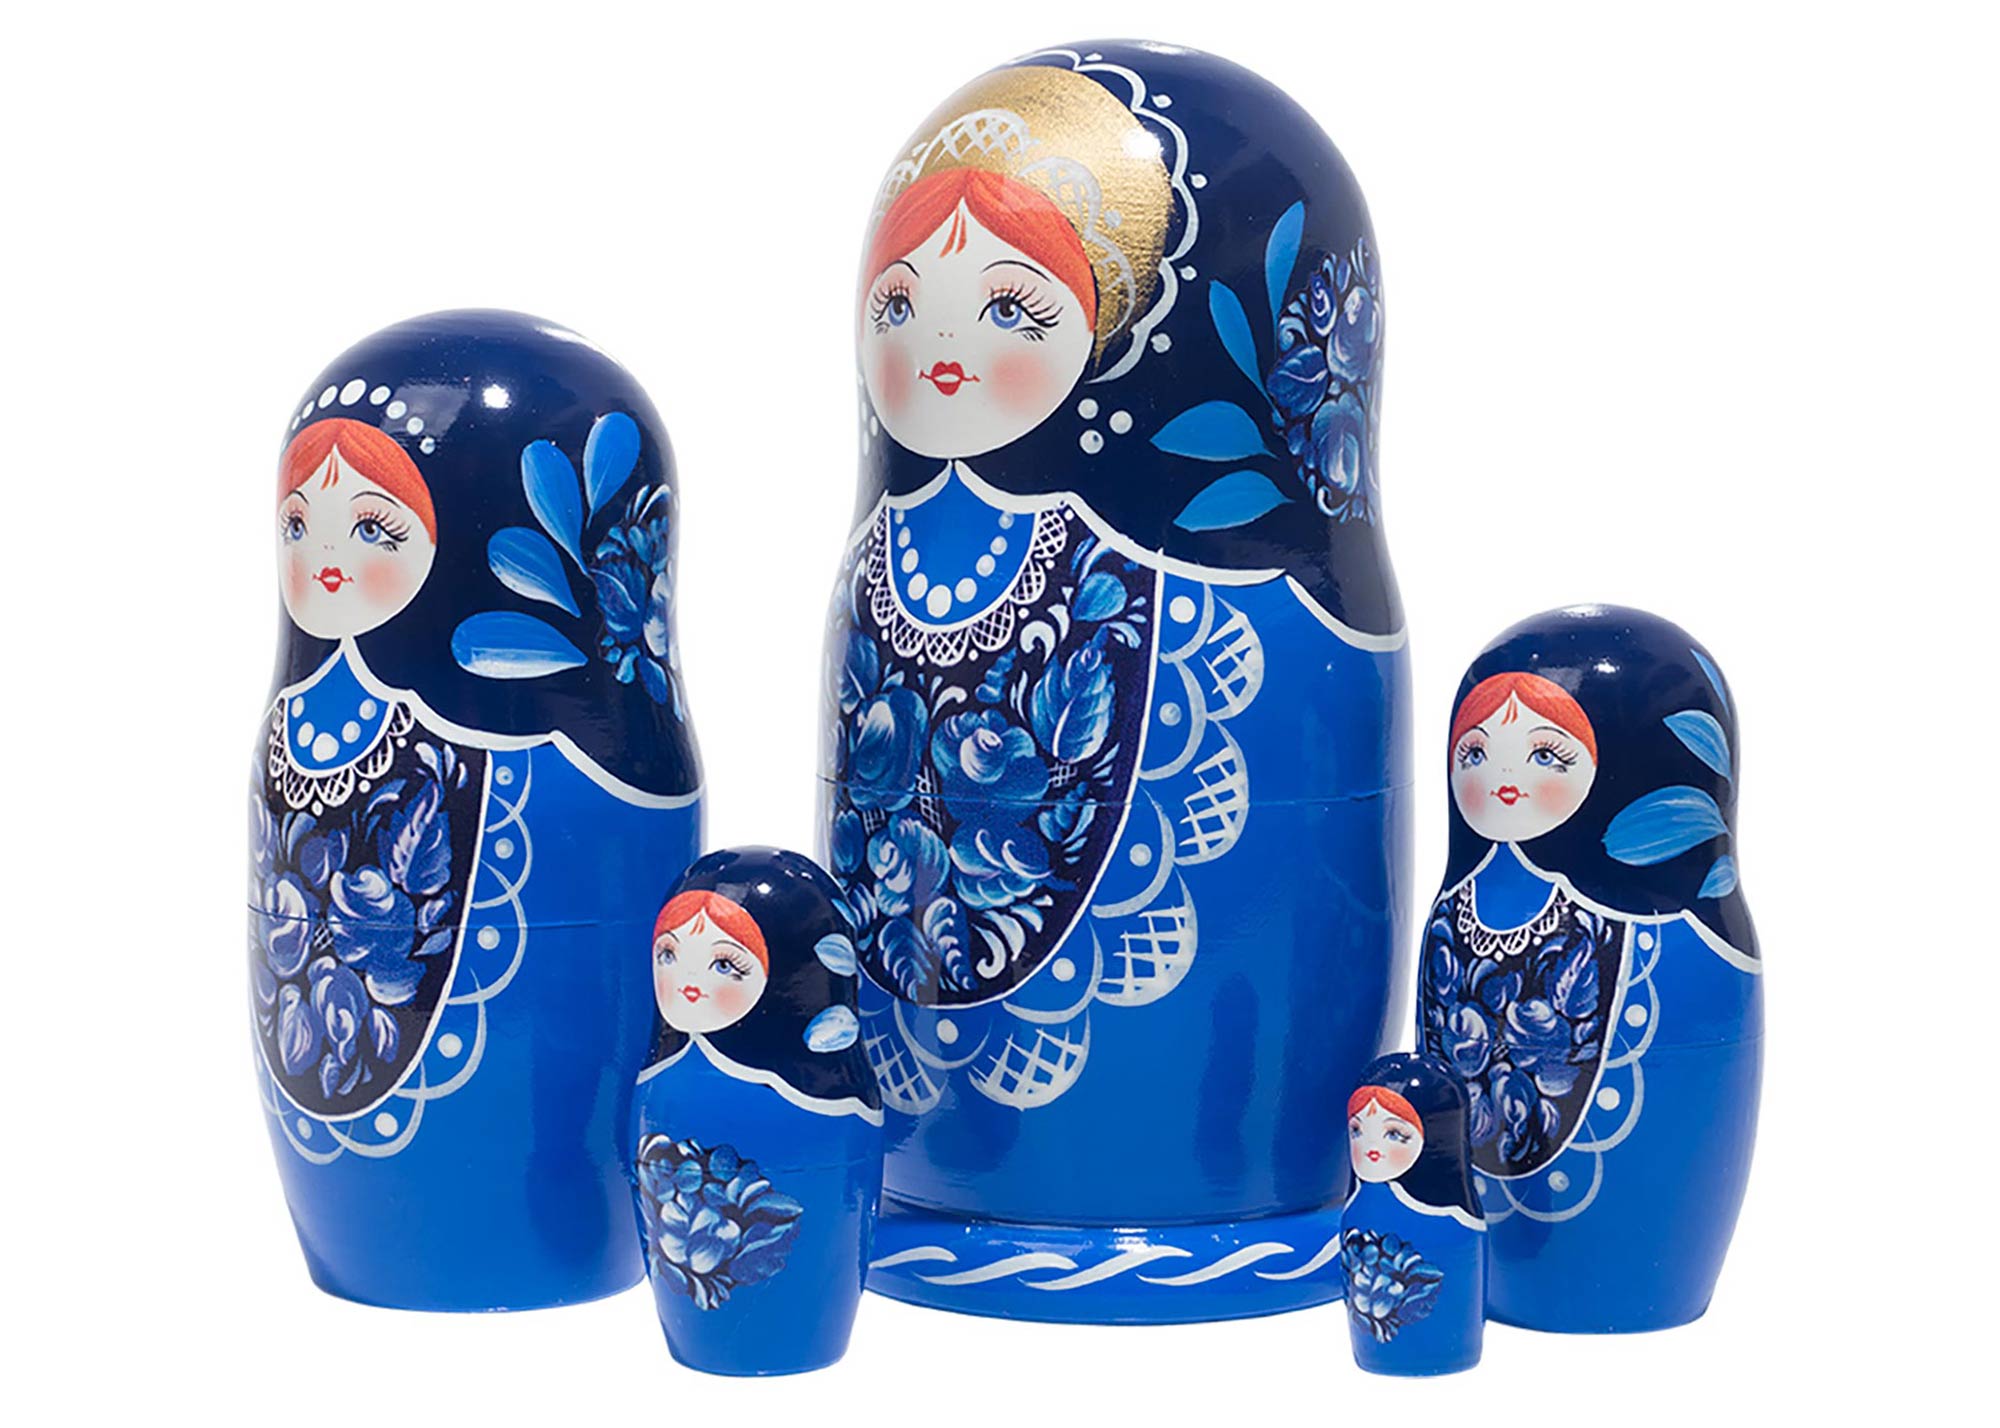 Buy Blue Beauty Nesting Doll 5pc./6" at GoldenCockerel.com